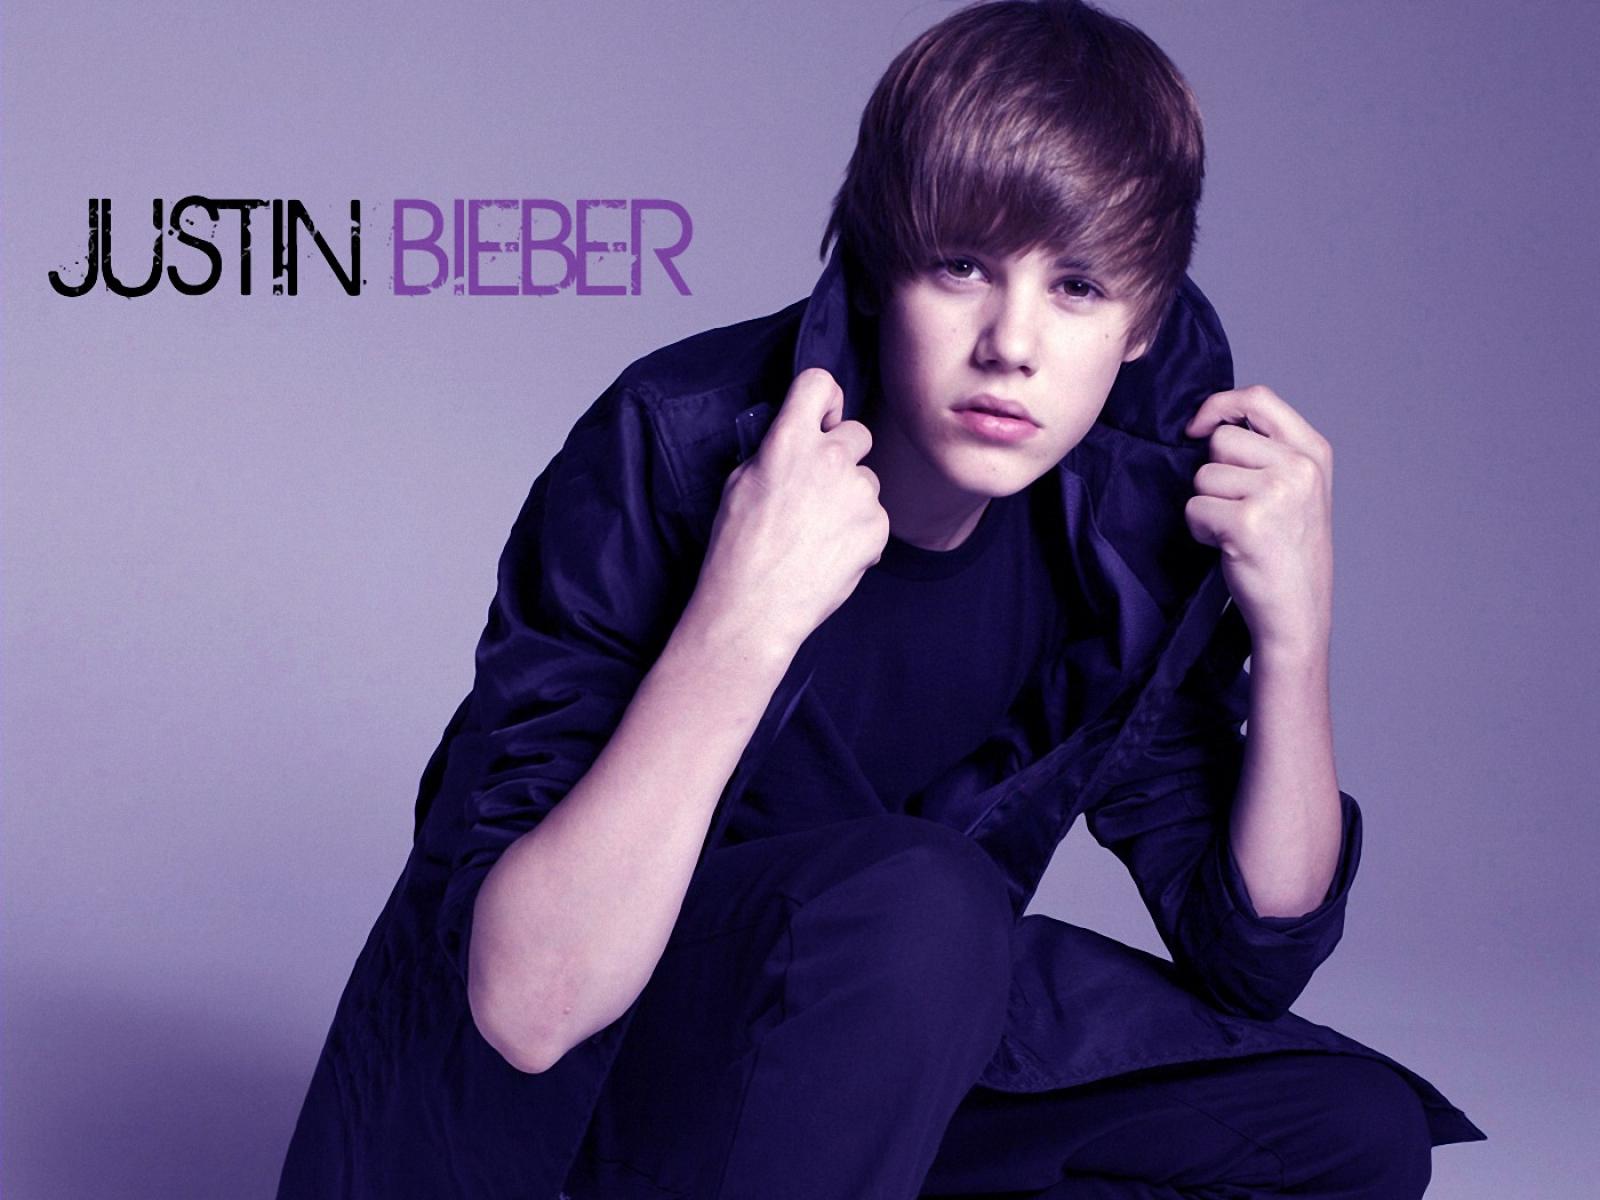 Justin Bieber HD Image Wallpaper Image